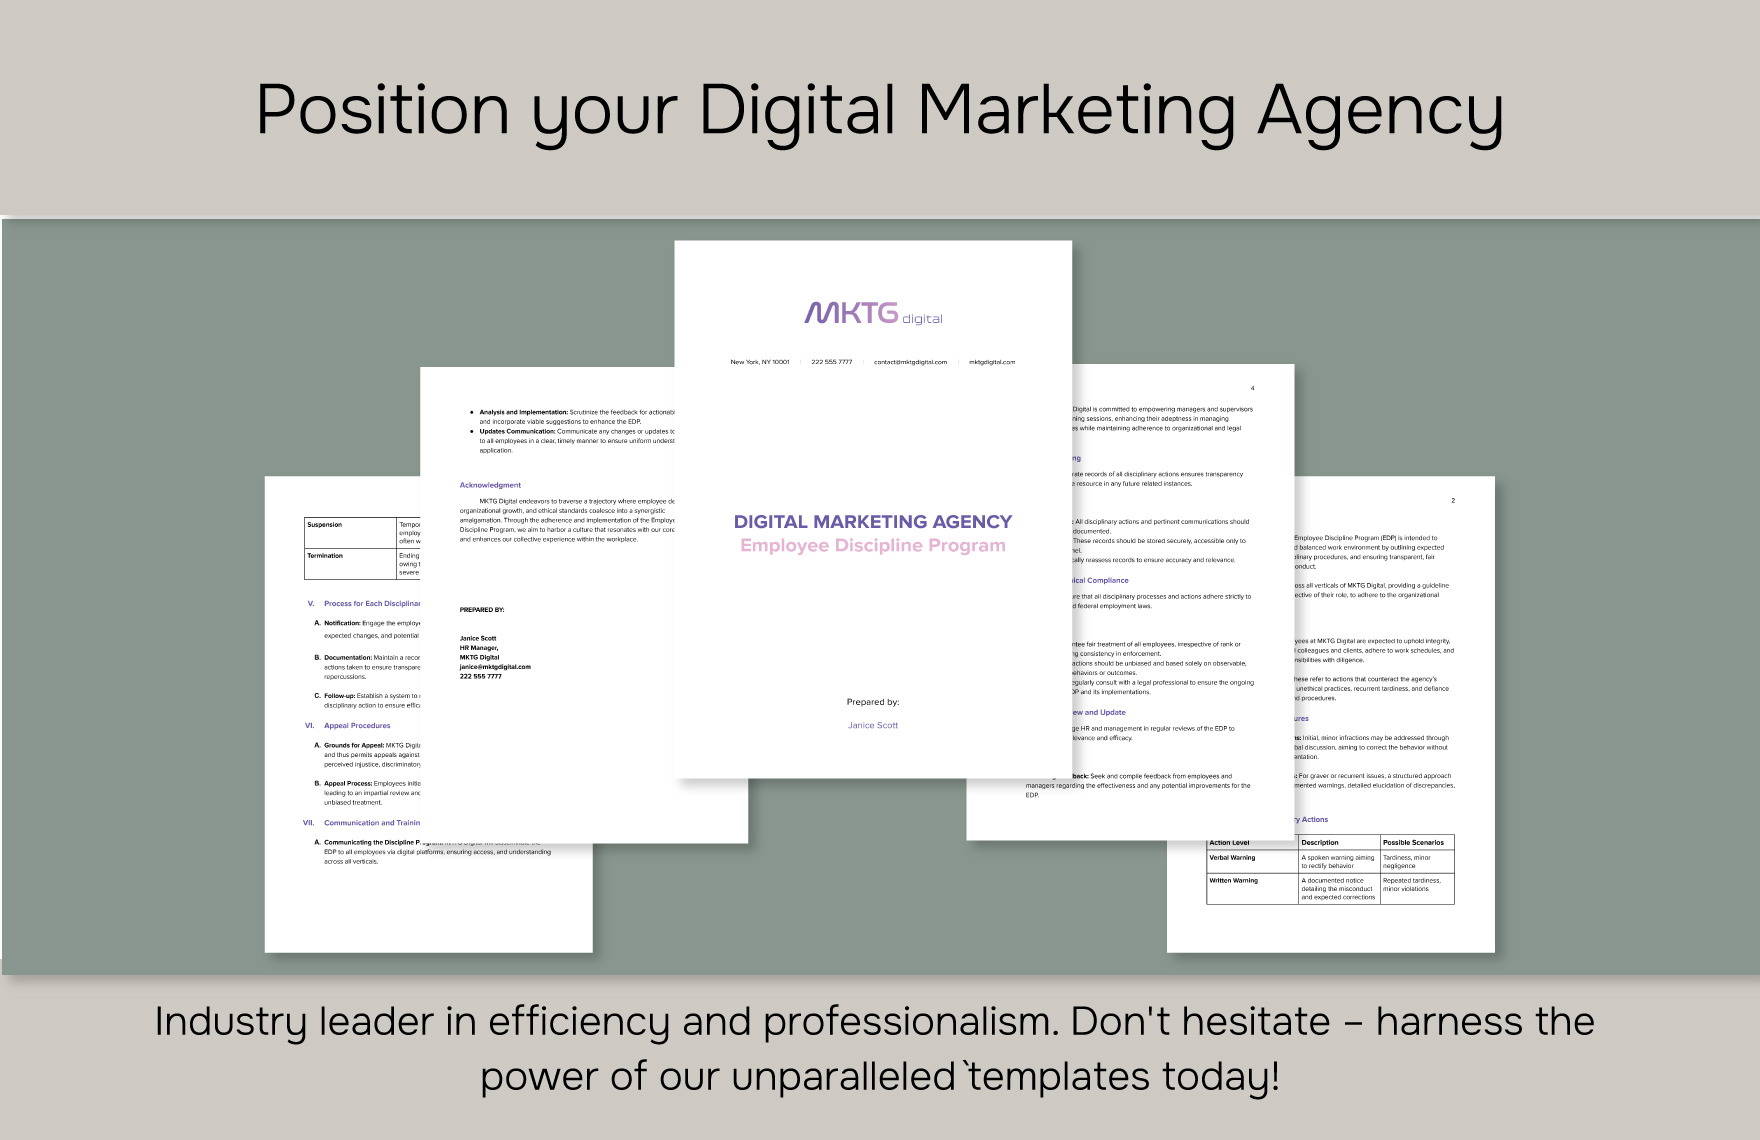 Digital Marketing Agency Employee Discipline Program HR Template